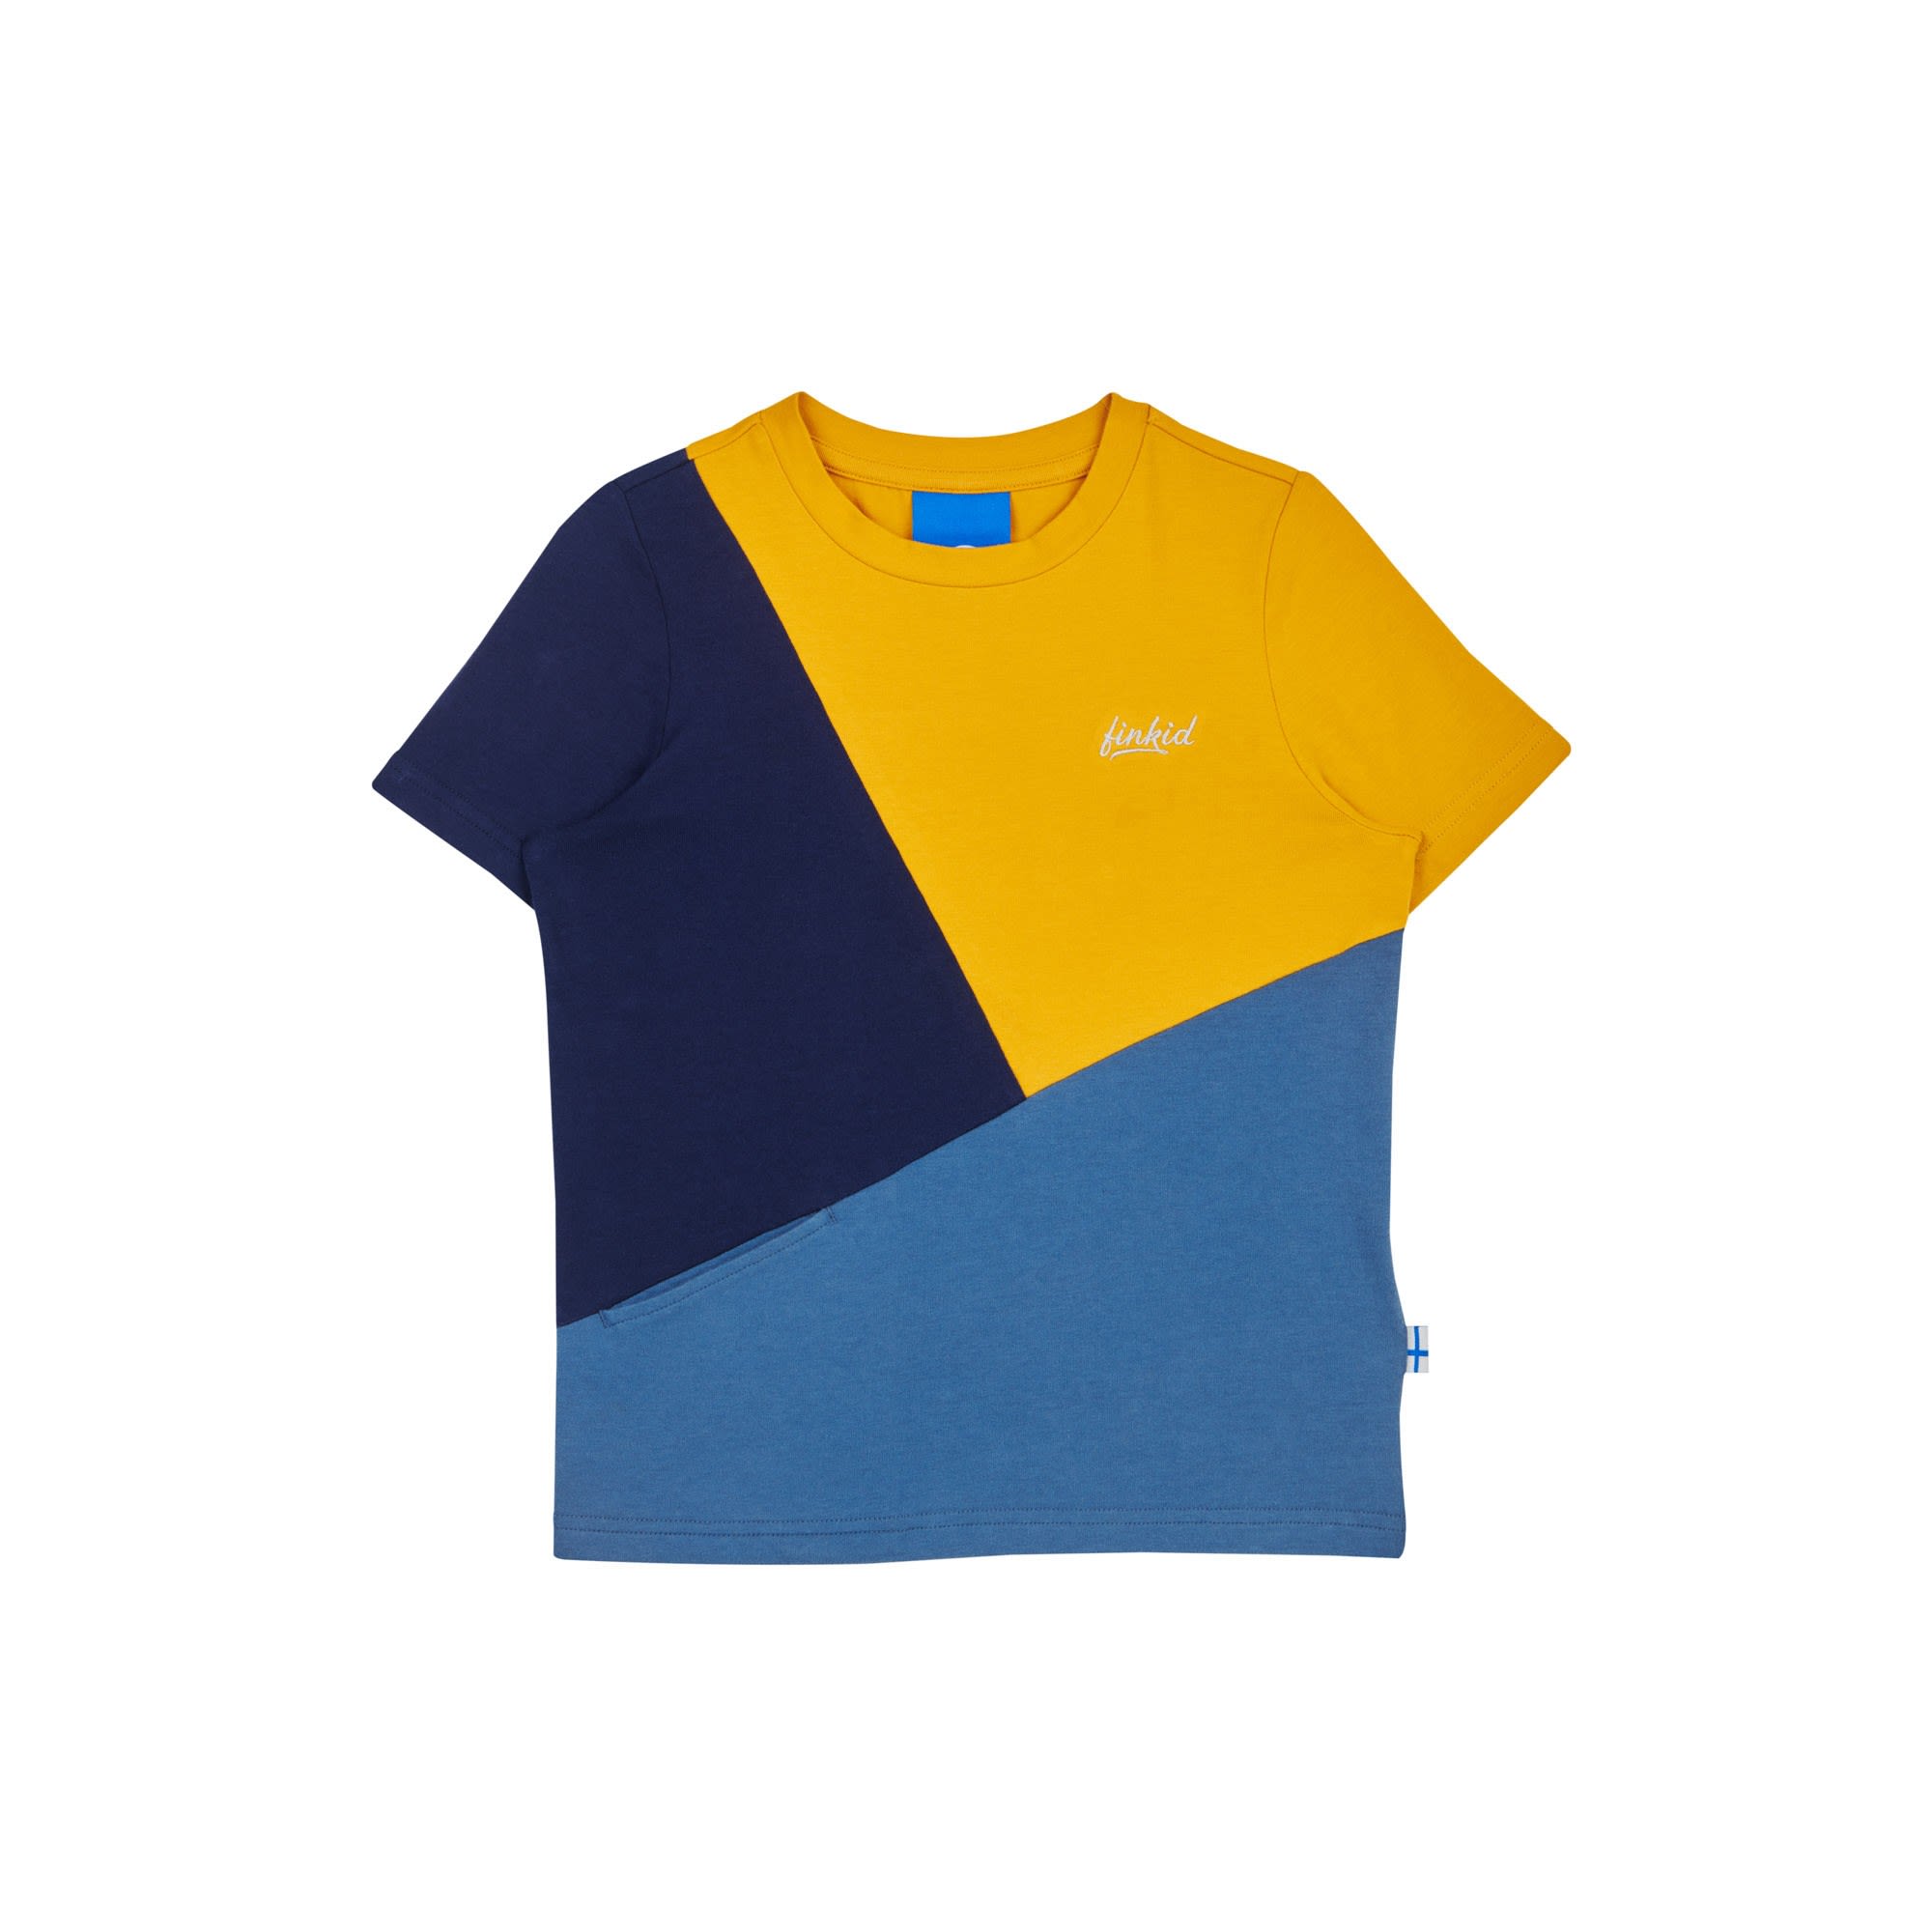 Finkid Ankkuri Colorblock - Blau - Gelb- Kurzarm-Shirts- Grsse 80 - 90 - Farbe Golden Yellow - Real Teal